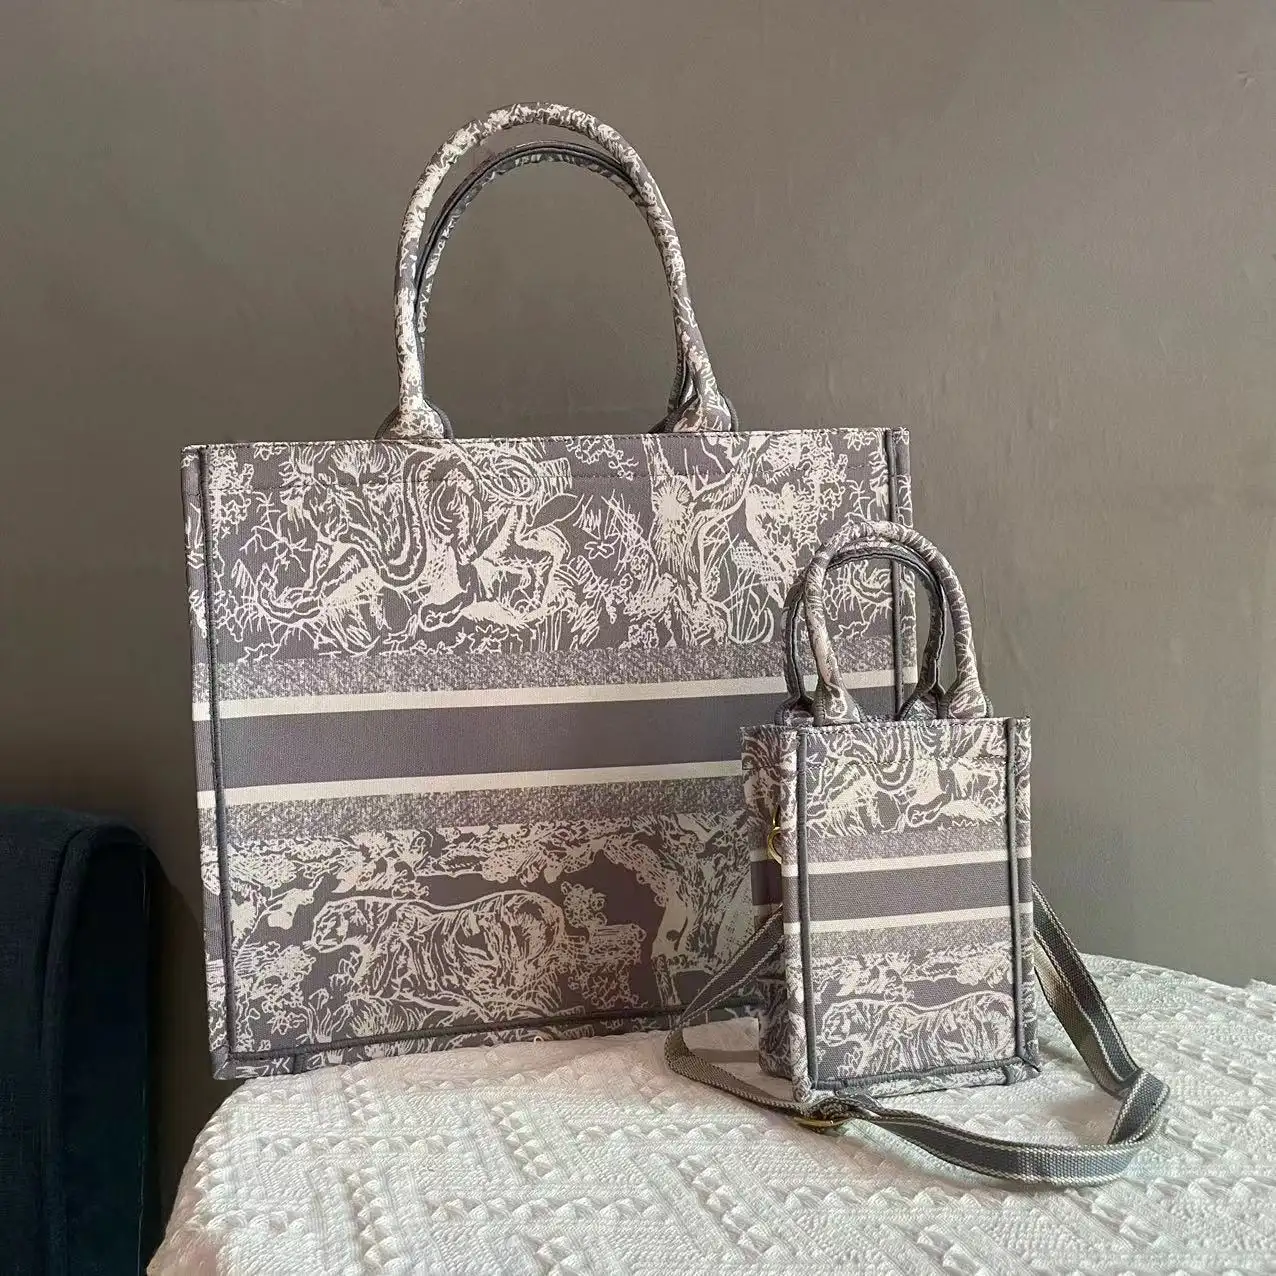 SY New Model Hot Sale Luxury Designer Women Genuine Leather Bag Set Famous Brands Woman Bag Set With Original Box